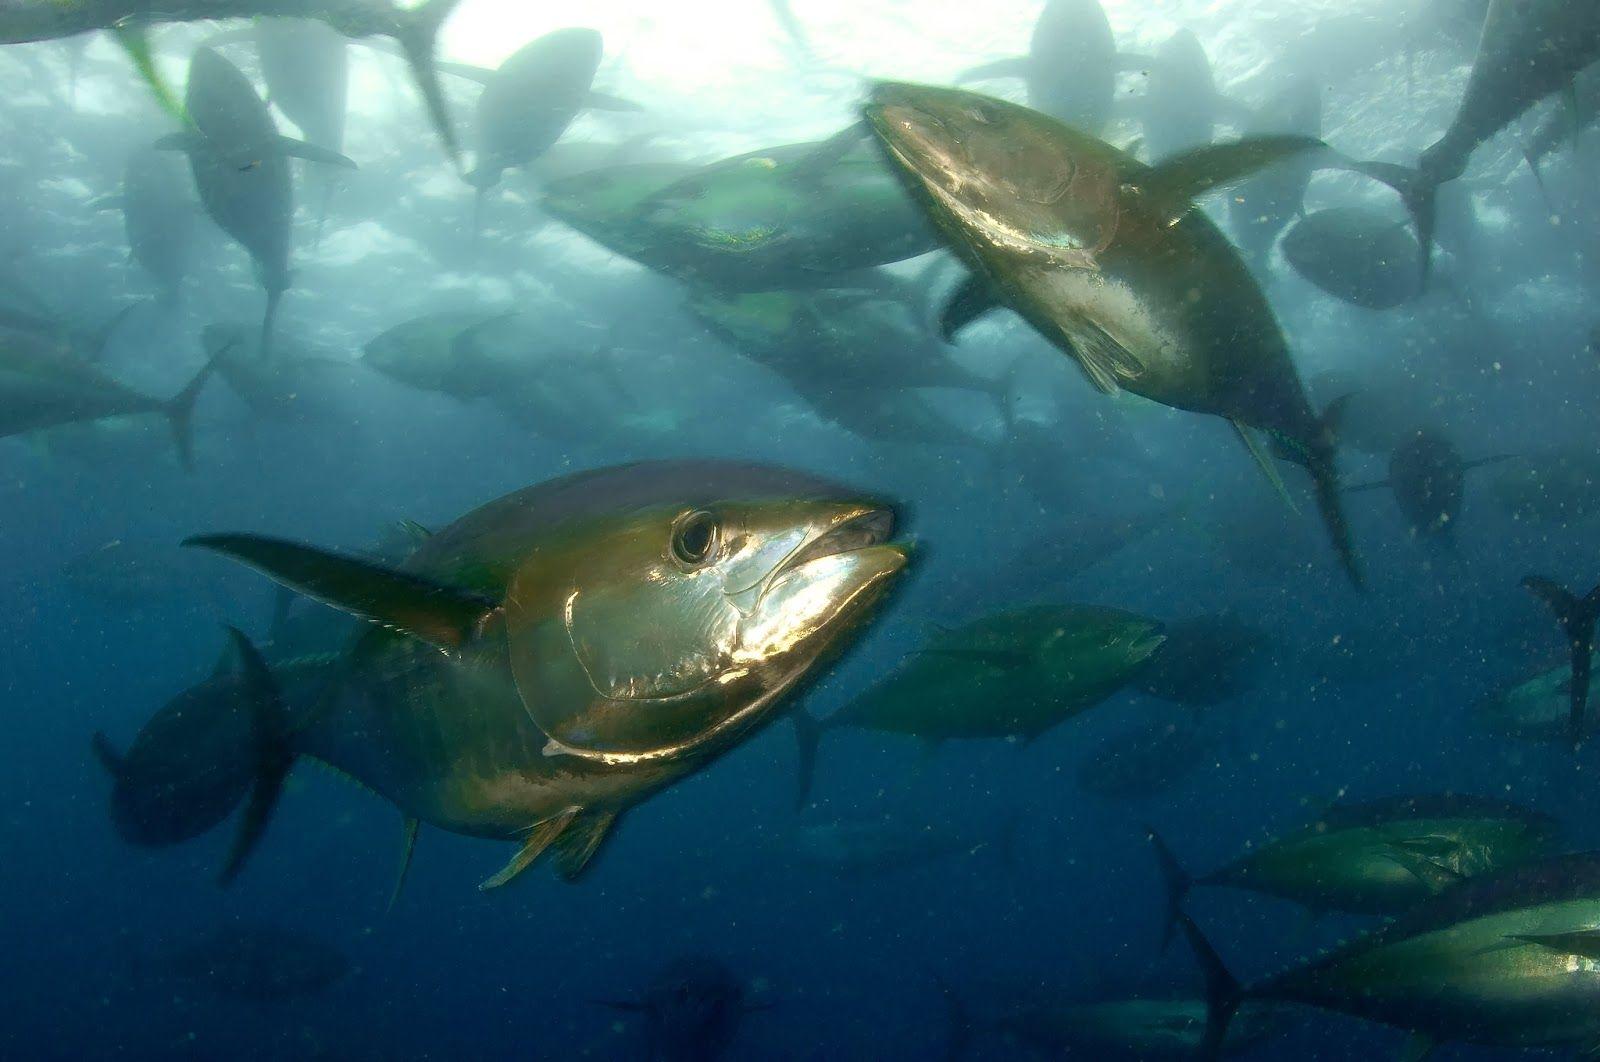 Two yellowfin tuna fishes desktop background wallpaper